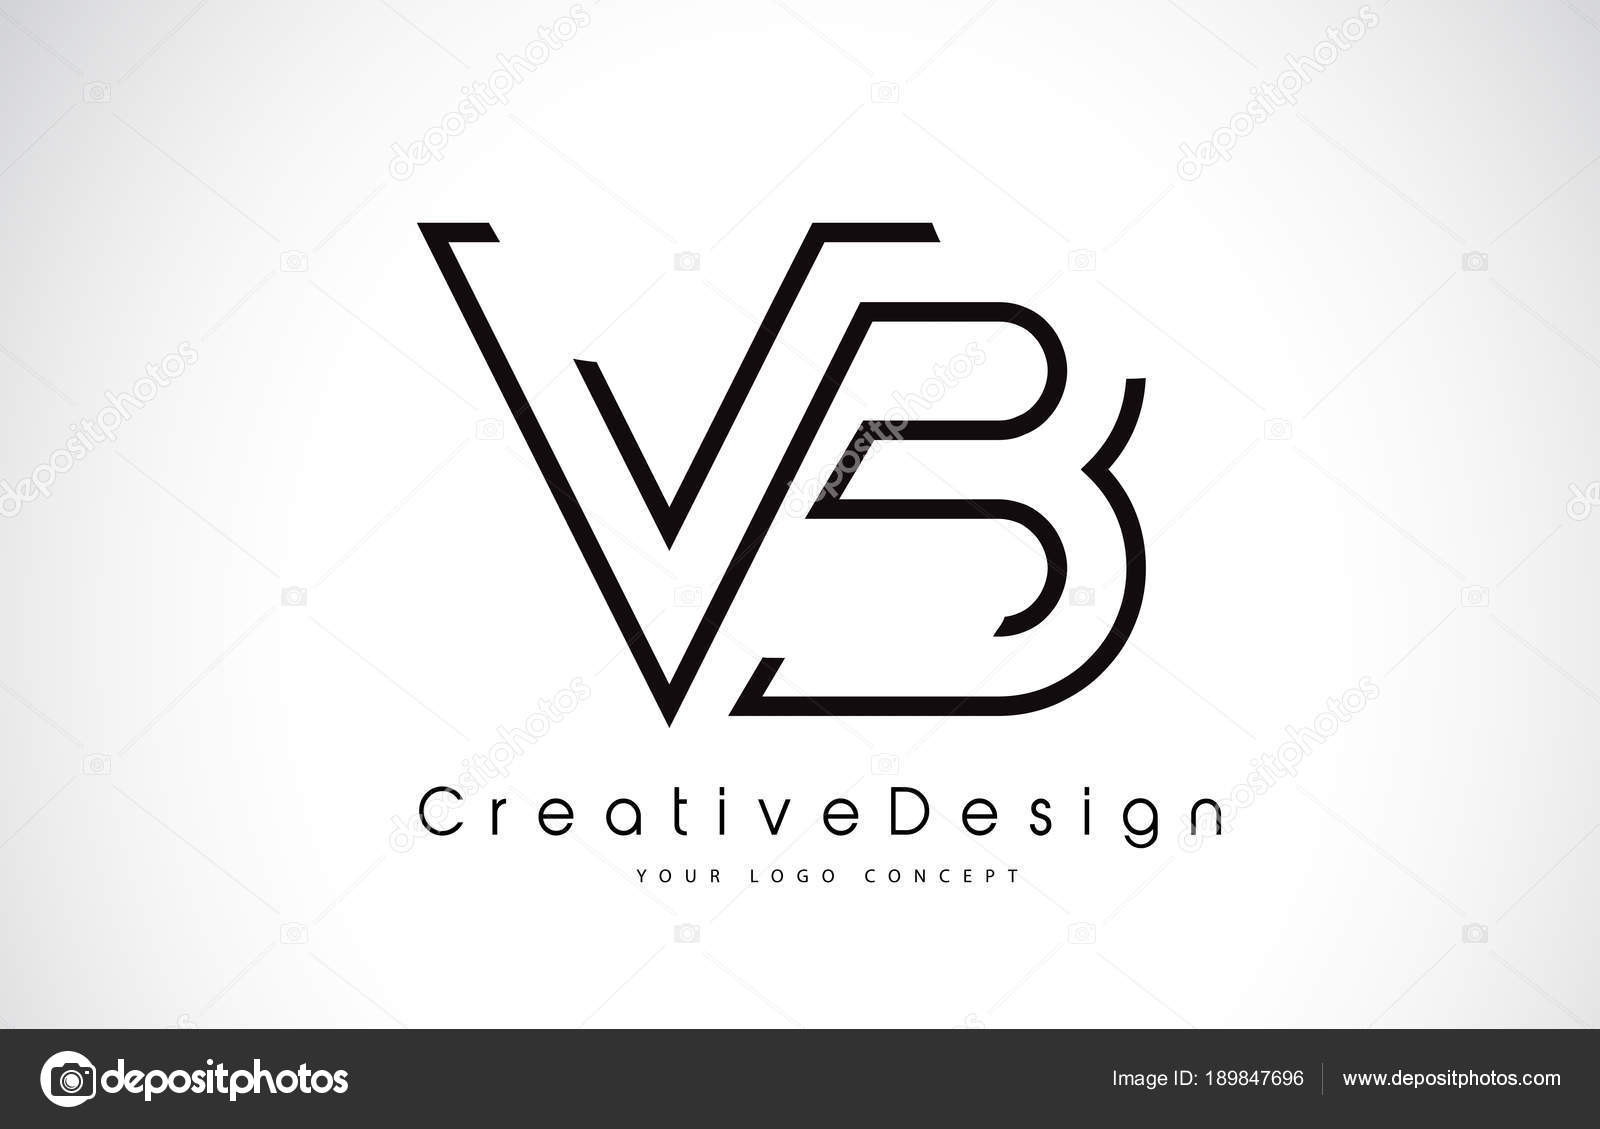 Vb V B Letter Logo Design In Black Colors Vector Image By C Twindesigner Vector Stock